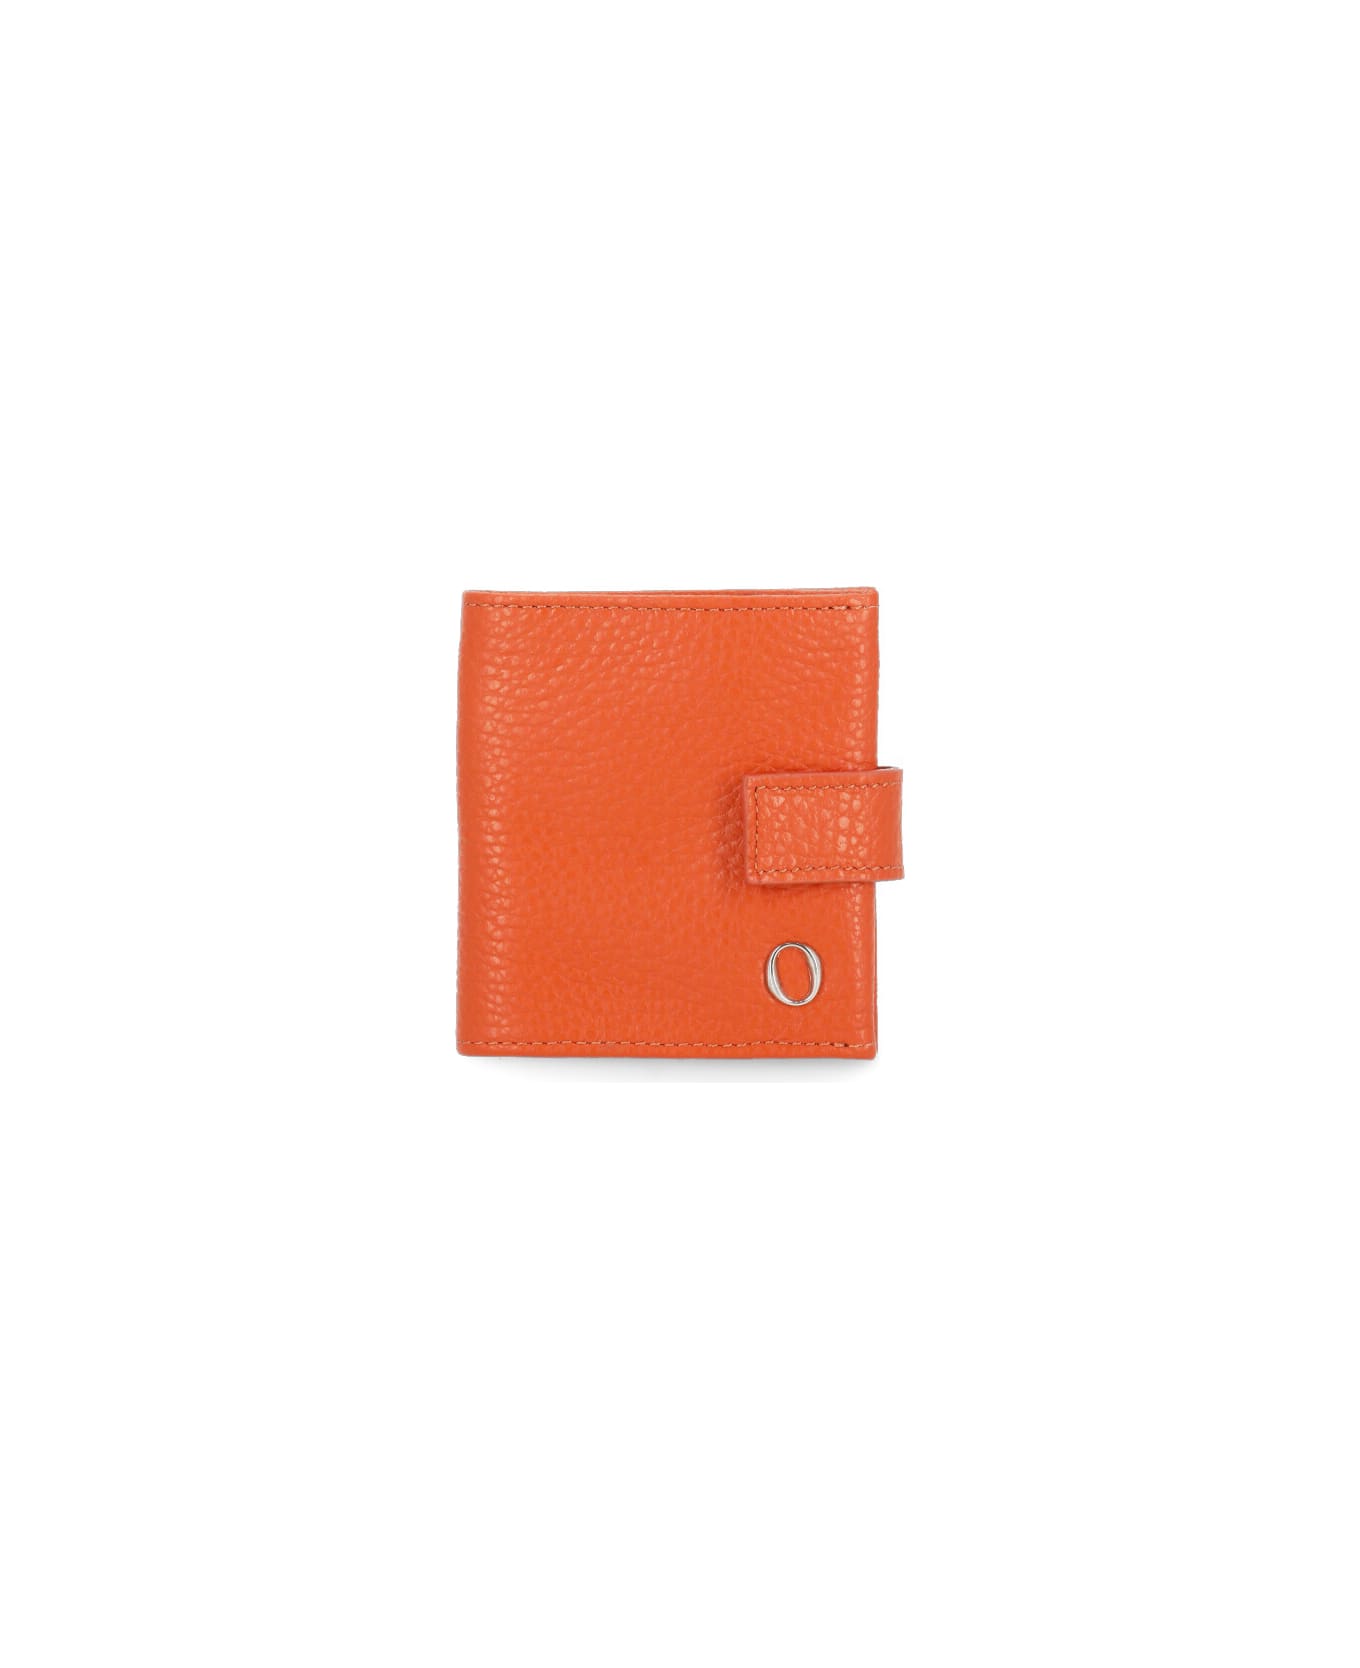 Orciani Micron Leather Purse - Orange 財布